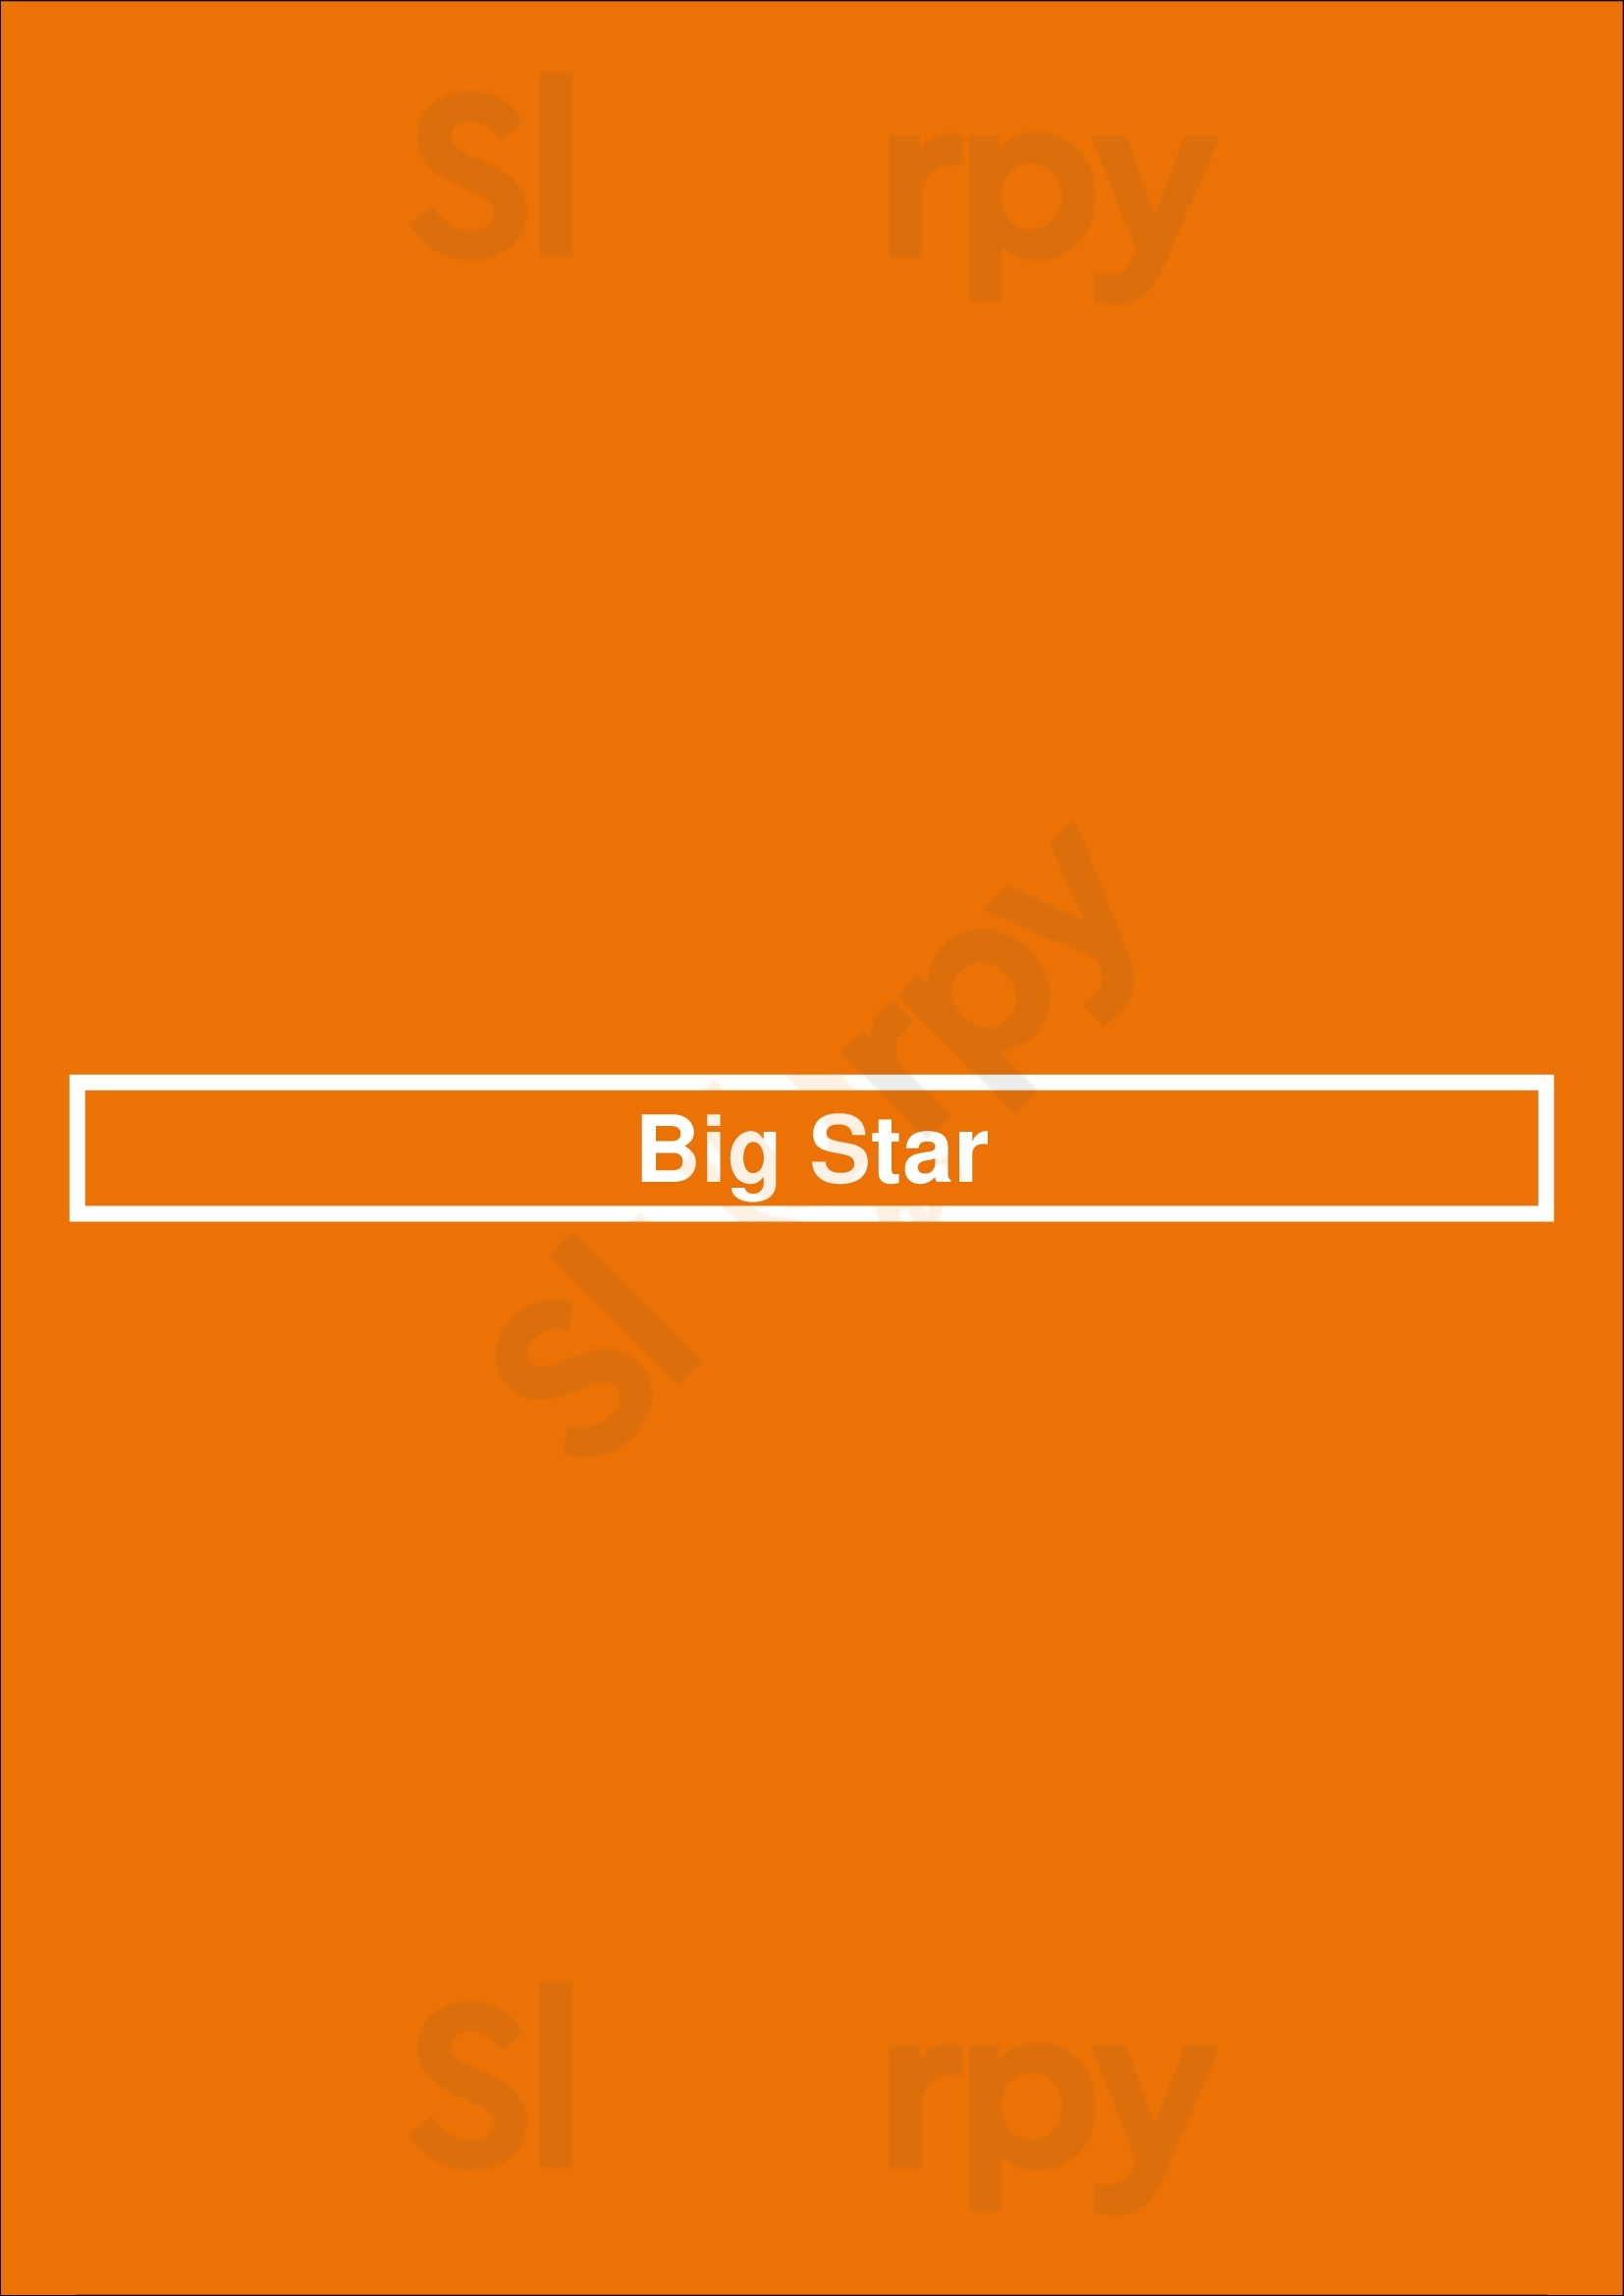 Big Star Chicago Menu - 1